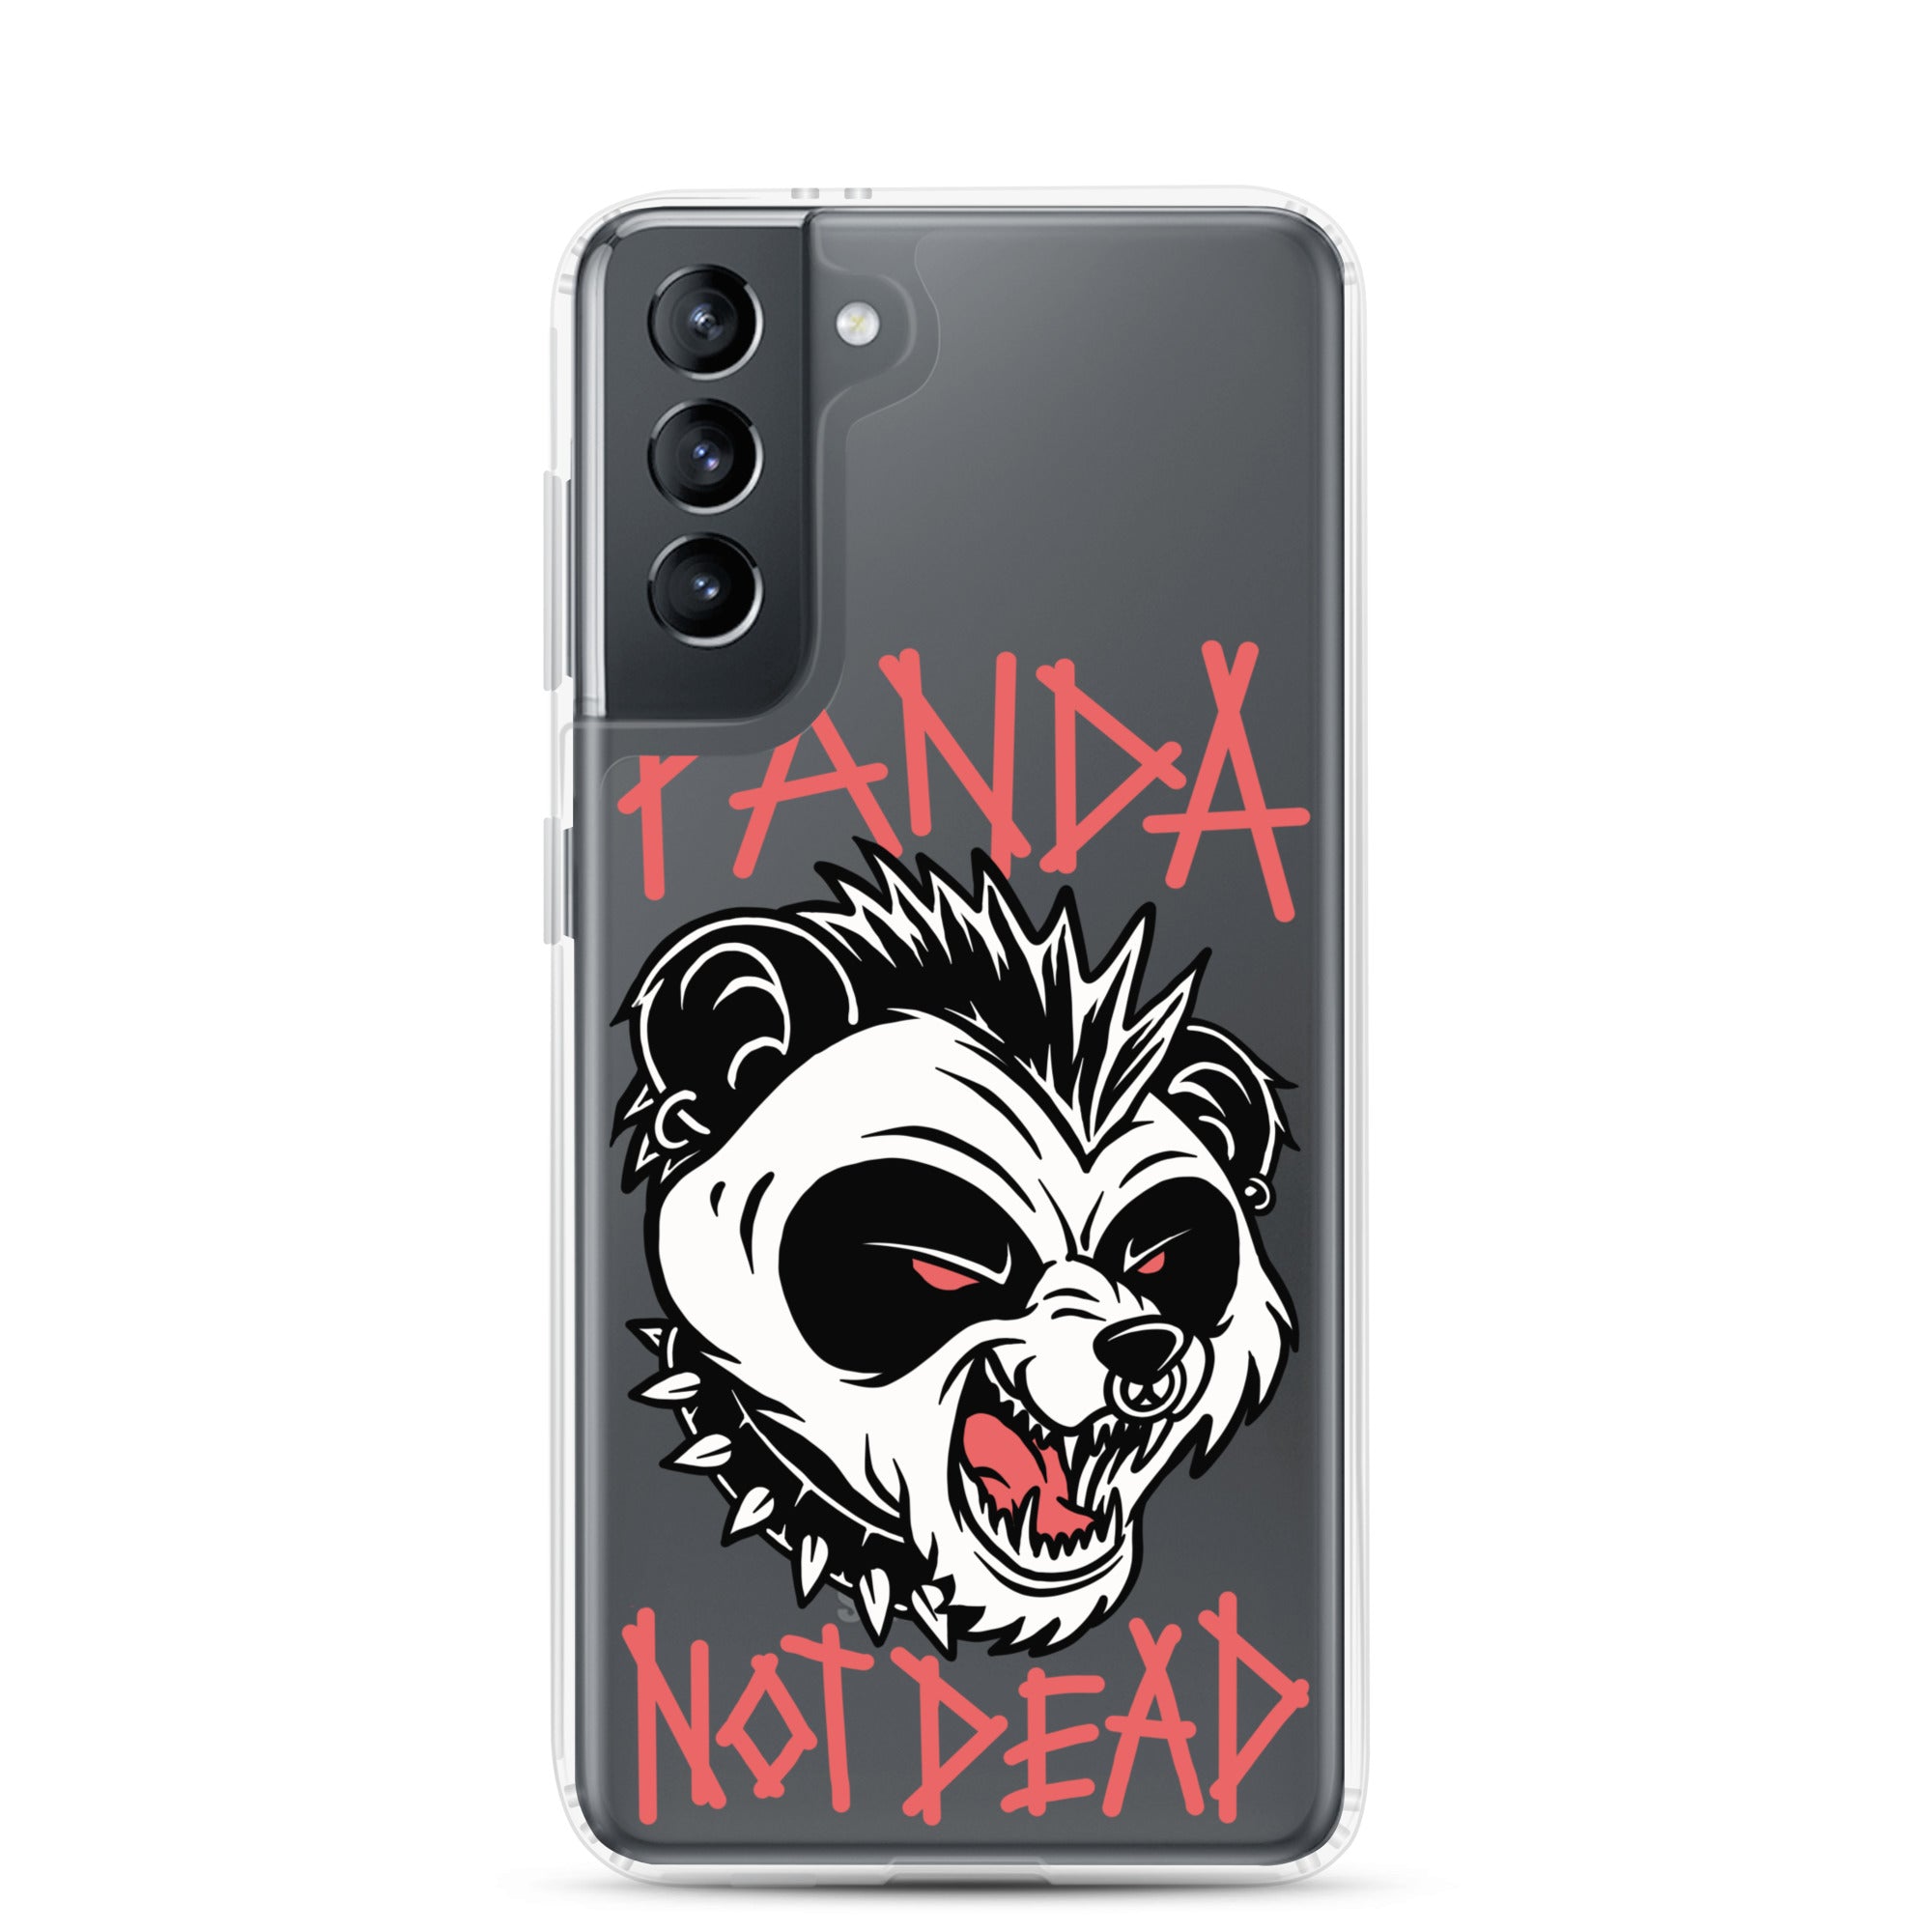 Carcasa transparente Samsung® Panda Not Dead